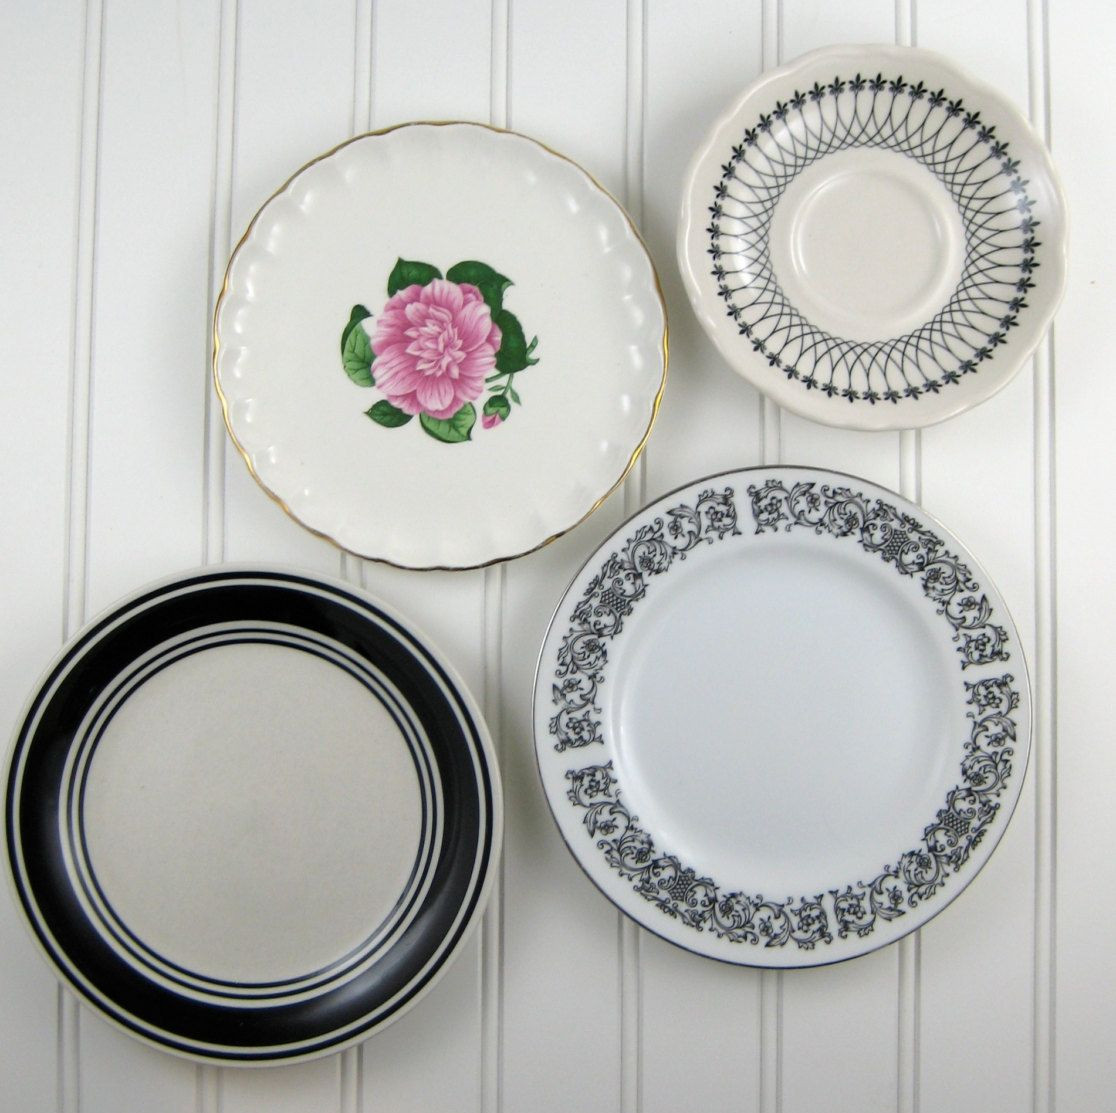 Decorative Plates For Kitchen Wall
 Decorative Plates Vintage Plates Mismatched Plates Kitchen